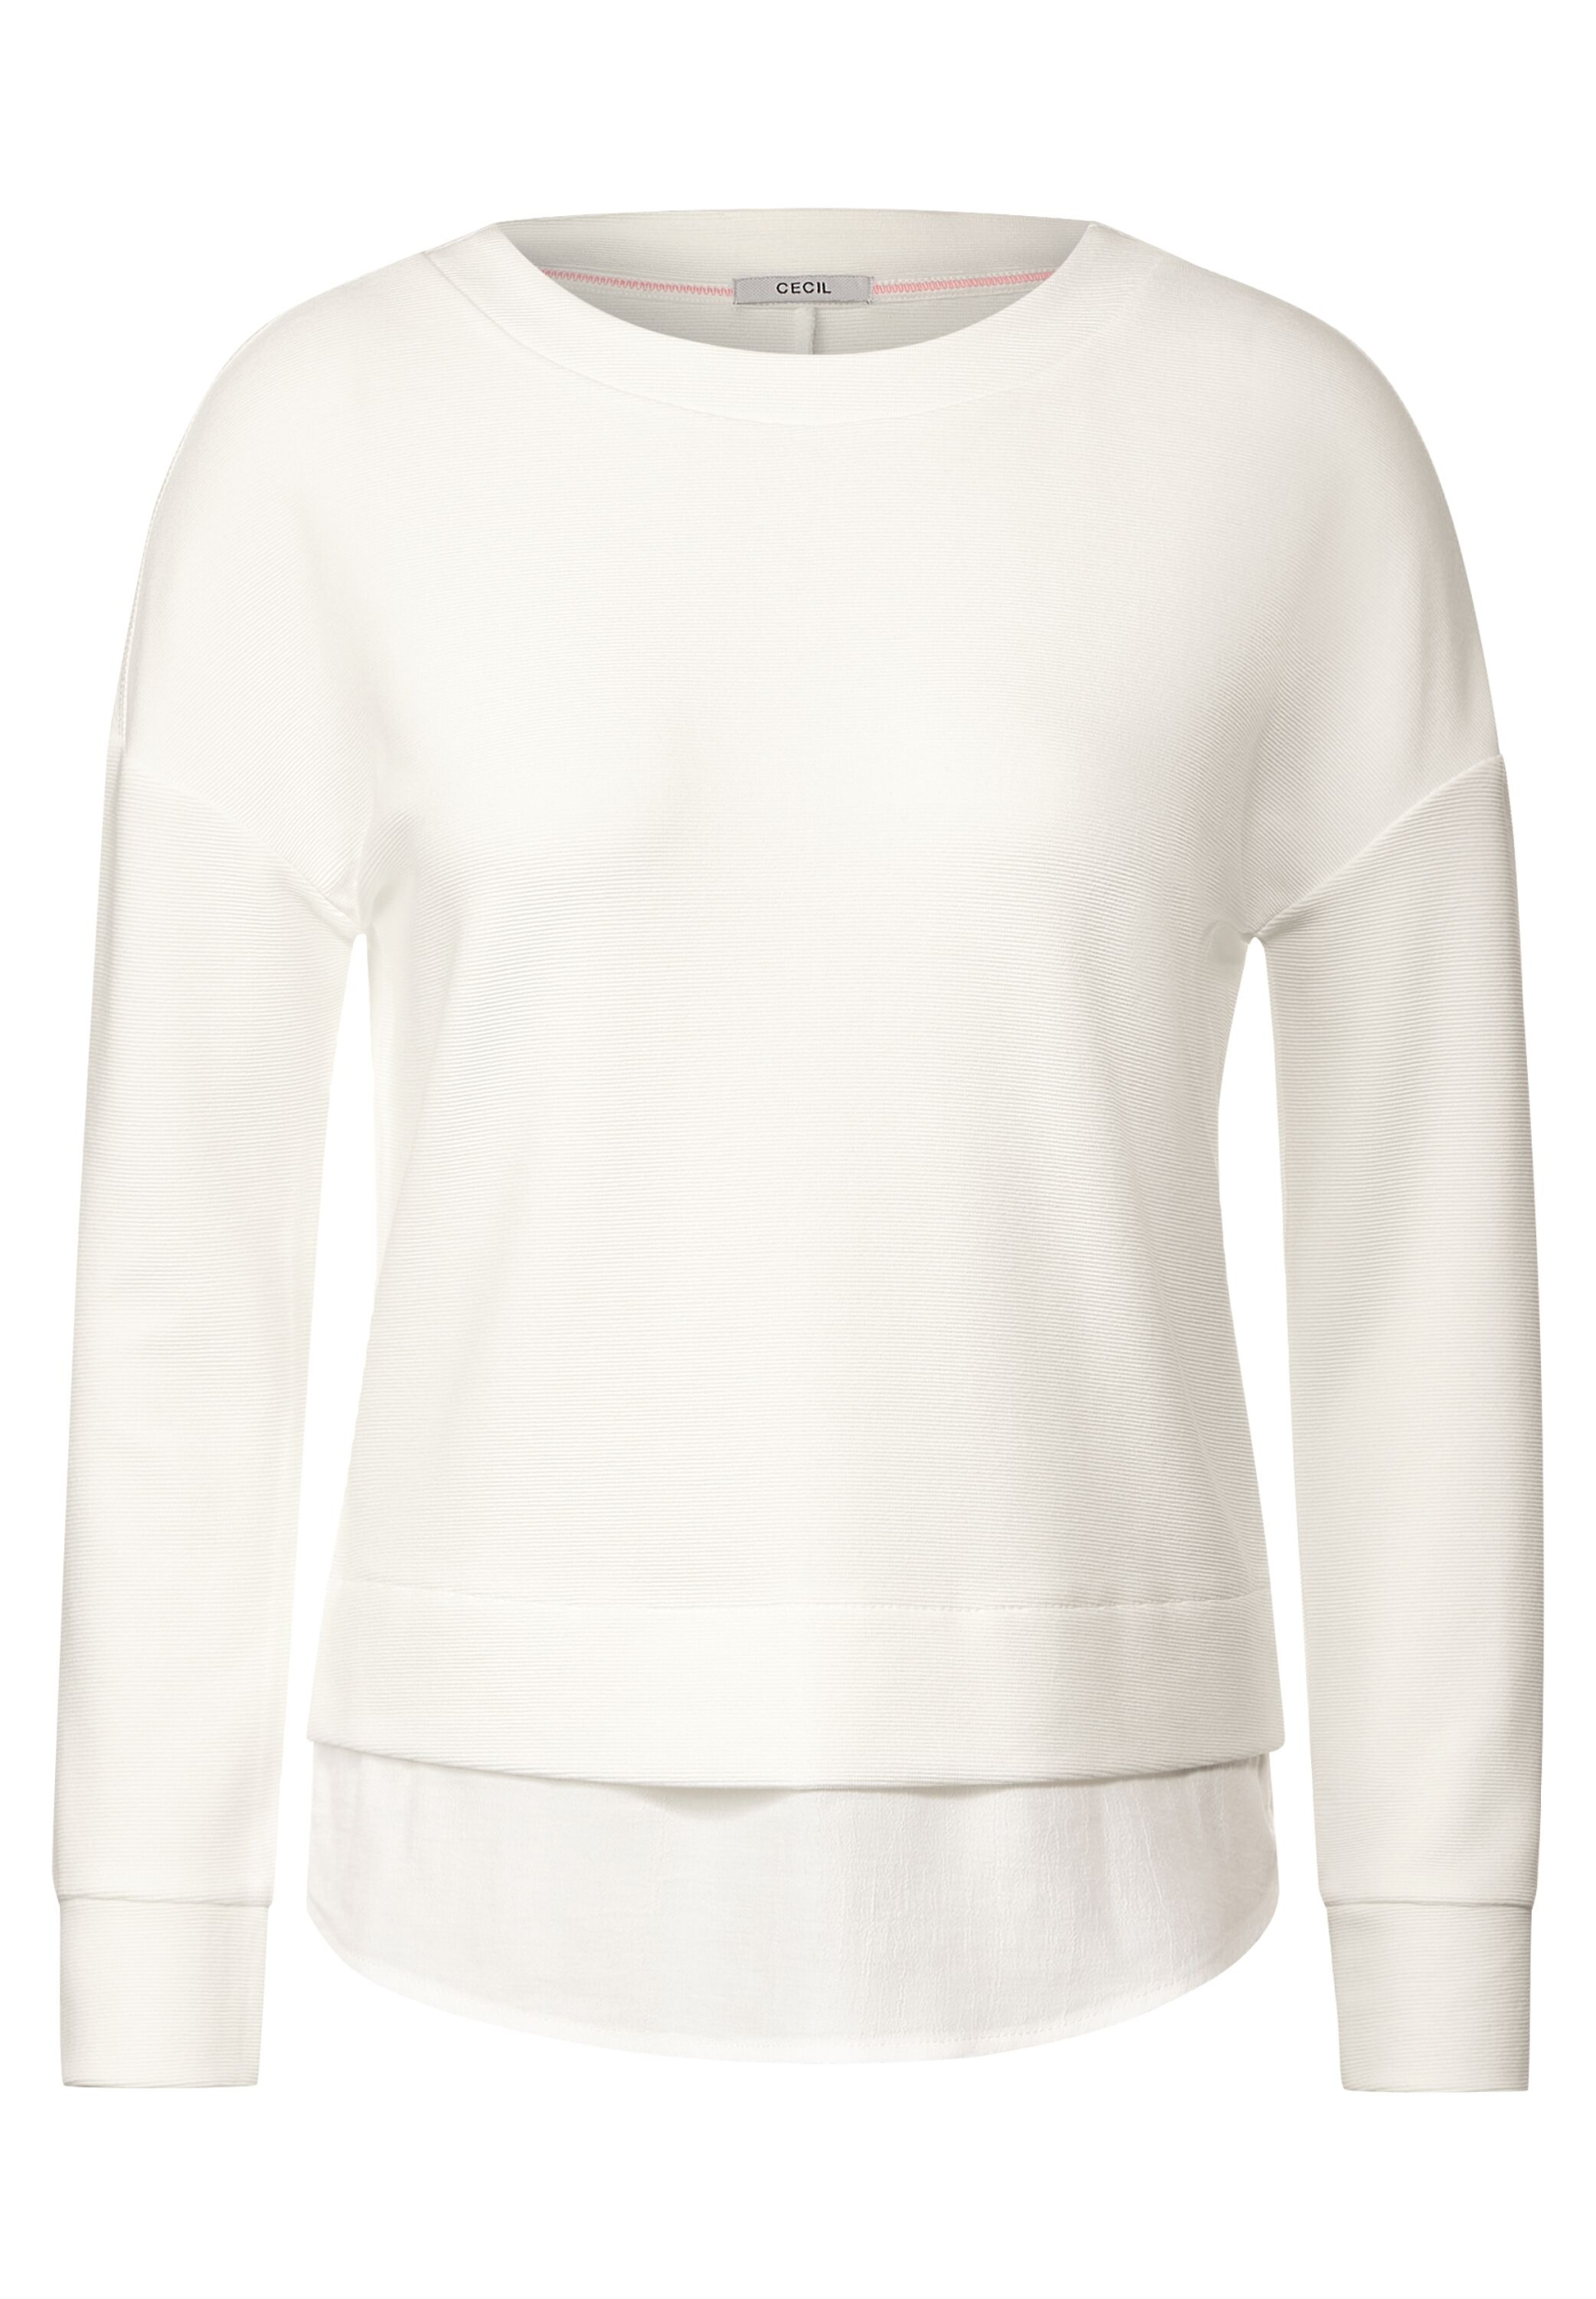 structure shirt w.long cuffs | 38 | lucid white | A320581-14451-38